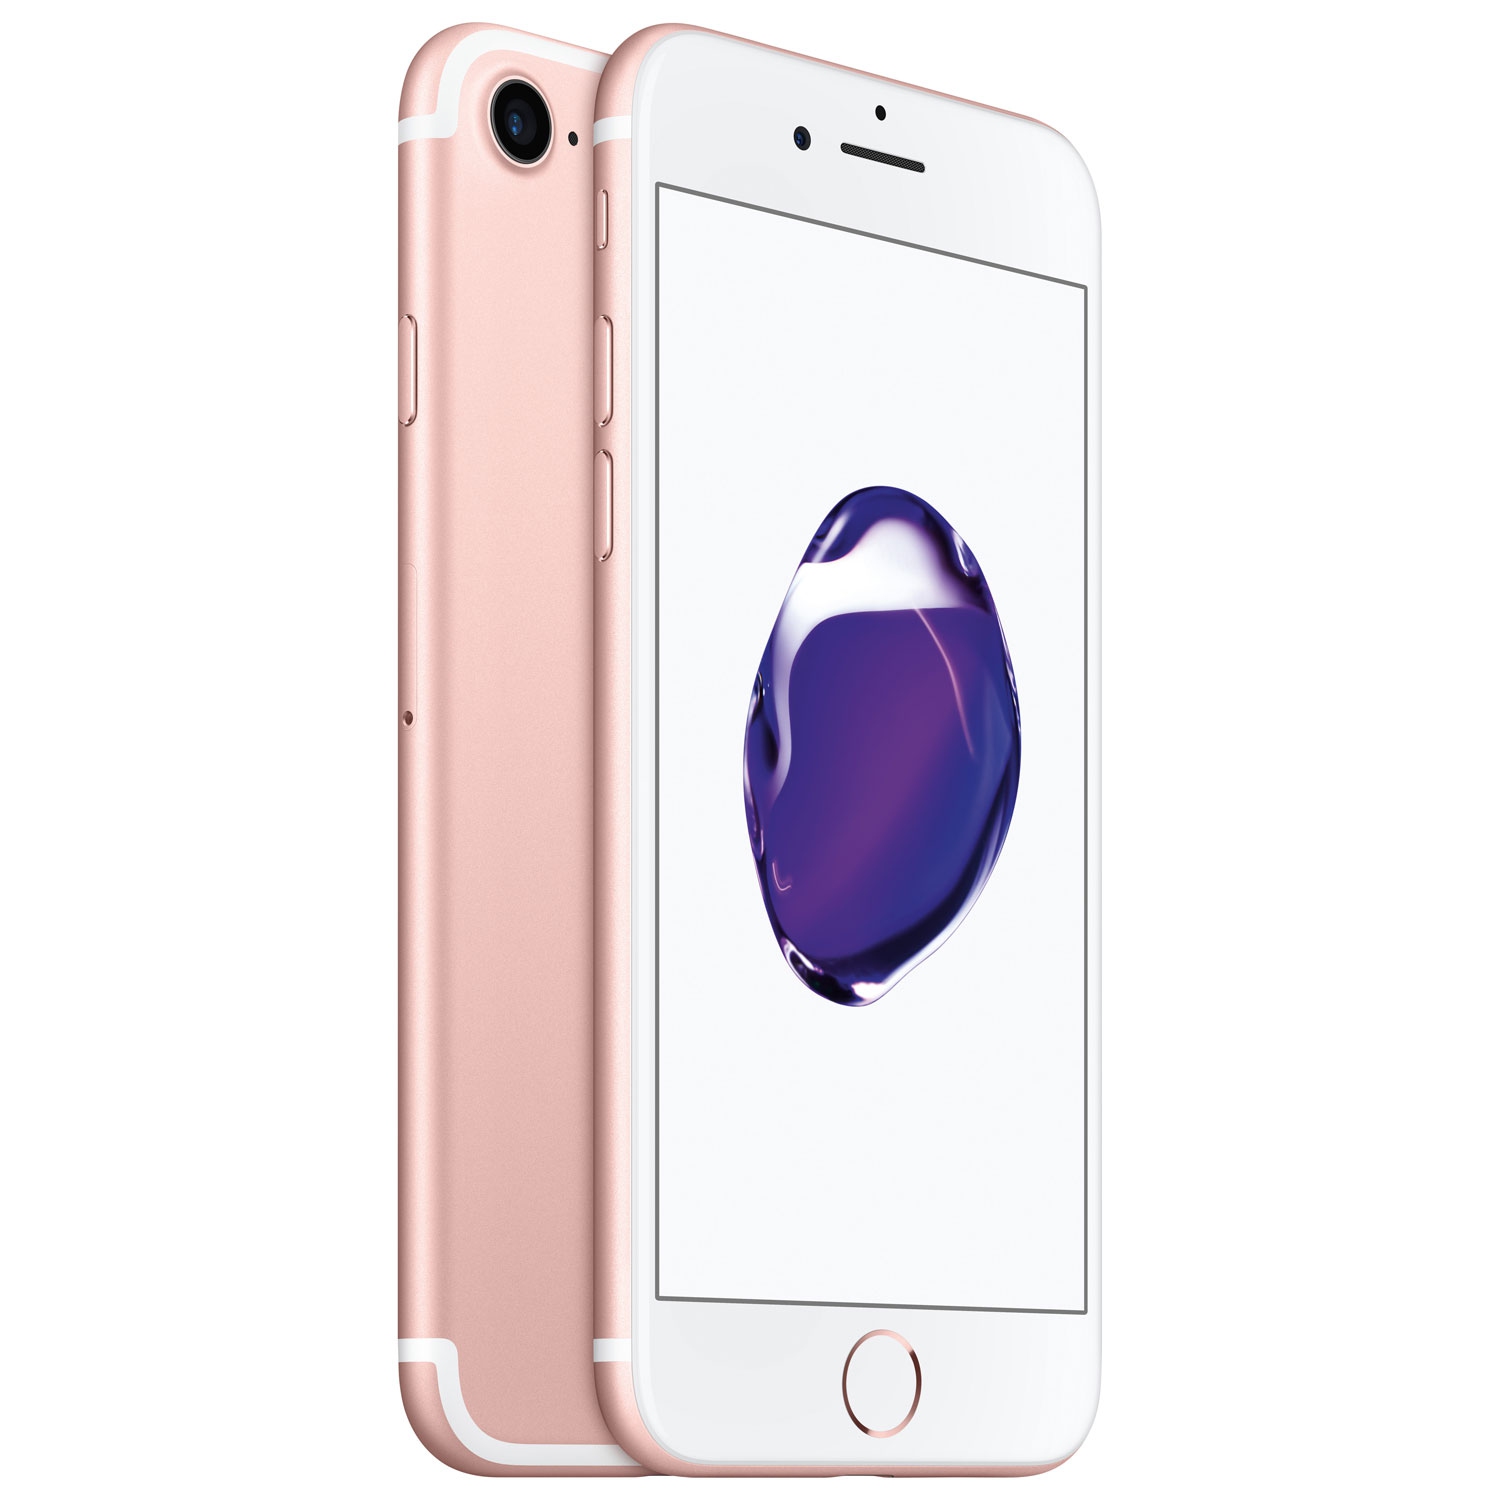 Refurbished (Good) - Apple iPhone 7 128GB Smartphone - Rose Gold - Unlocked